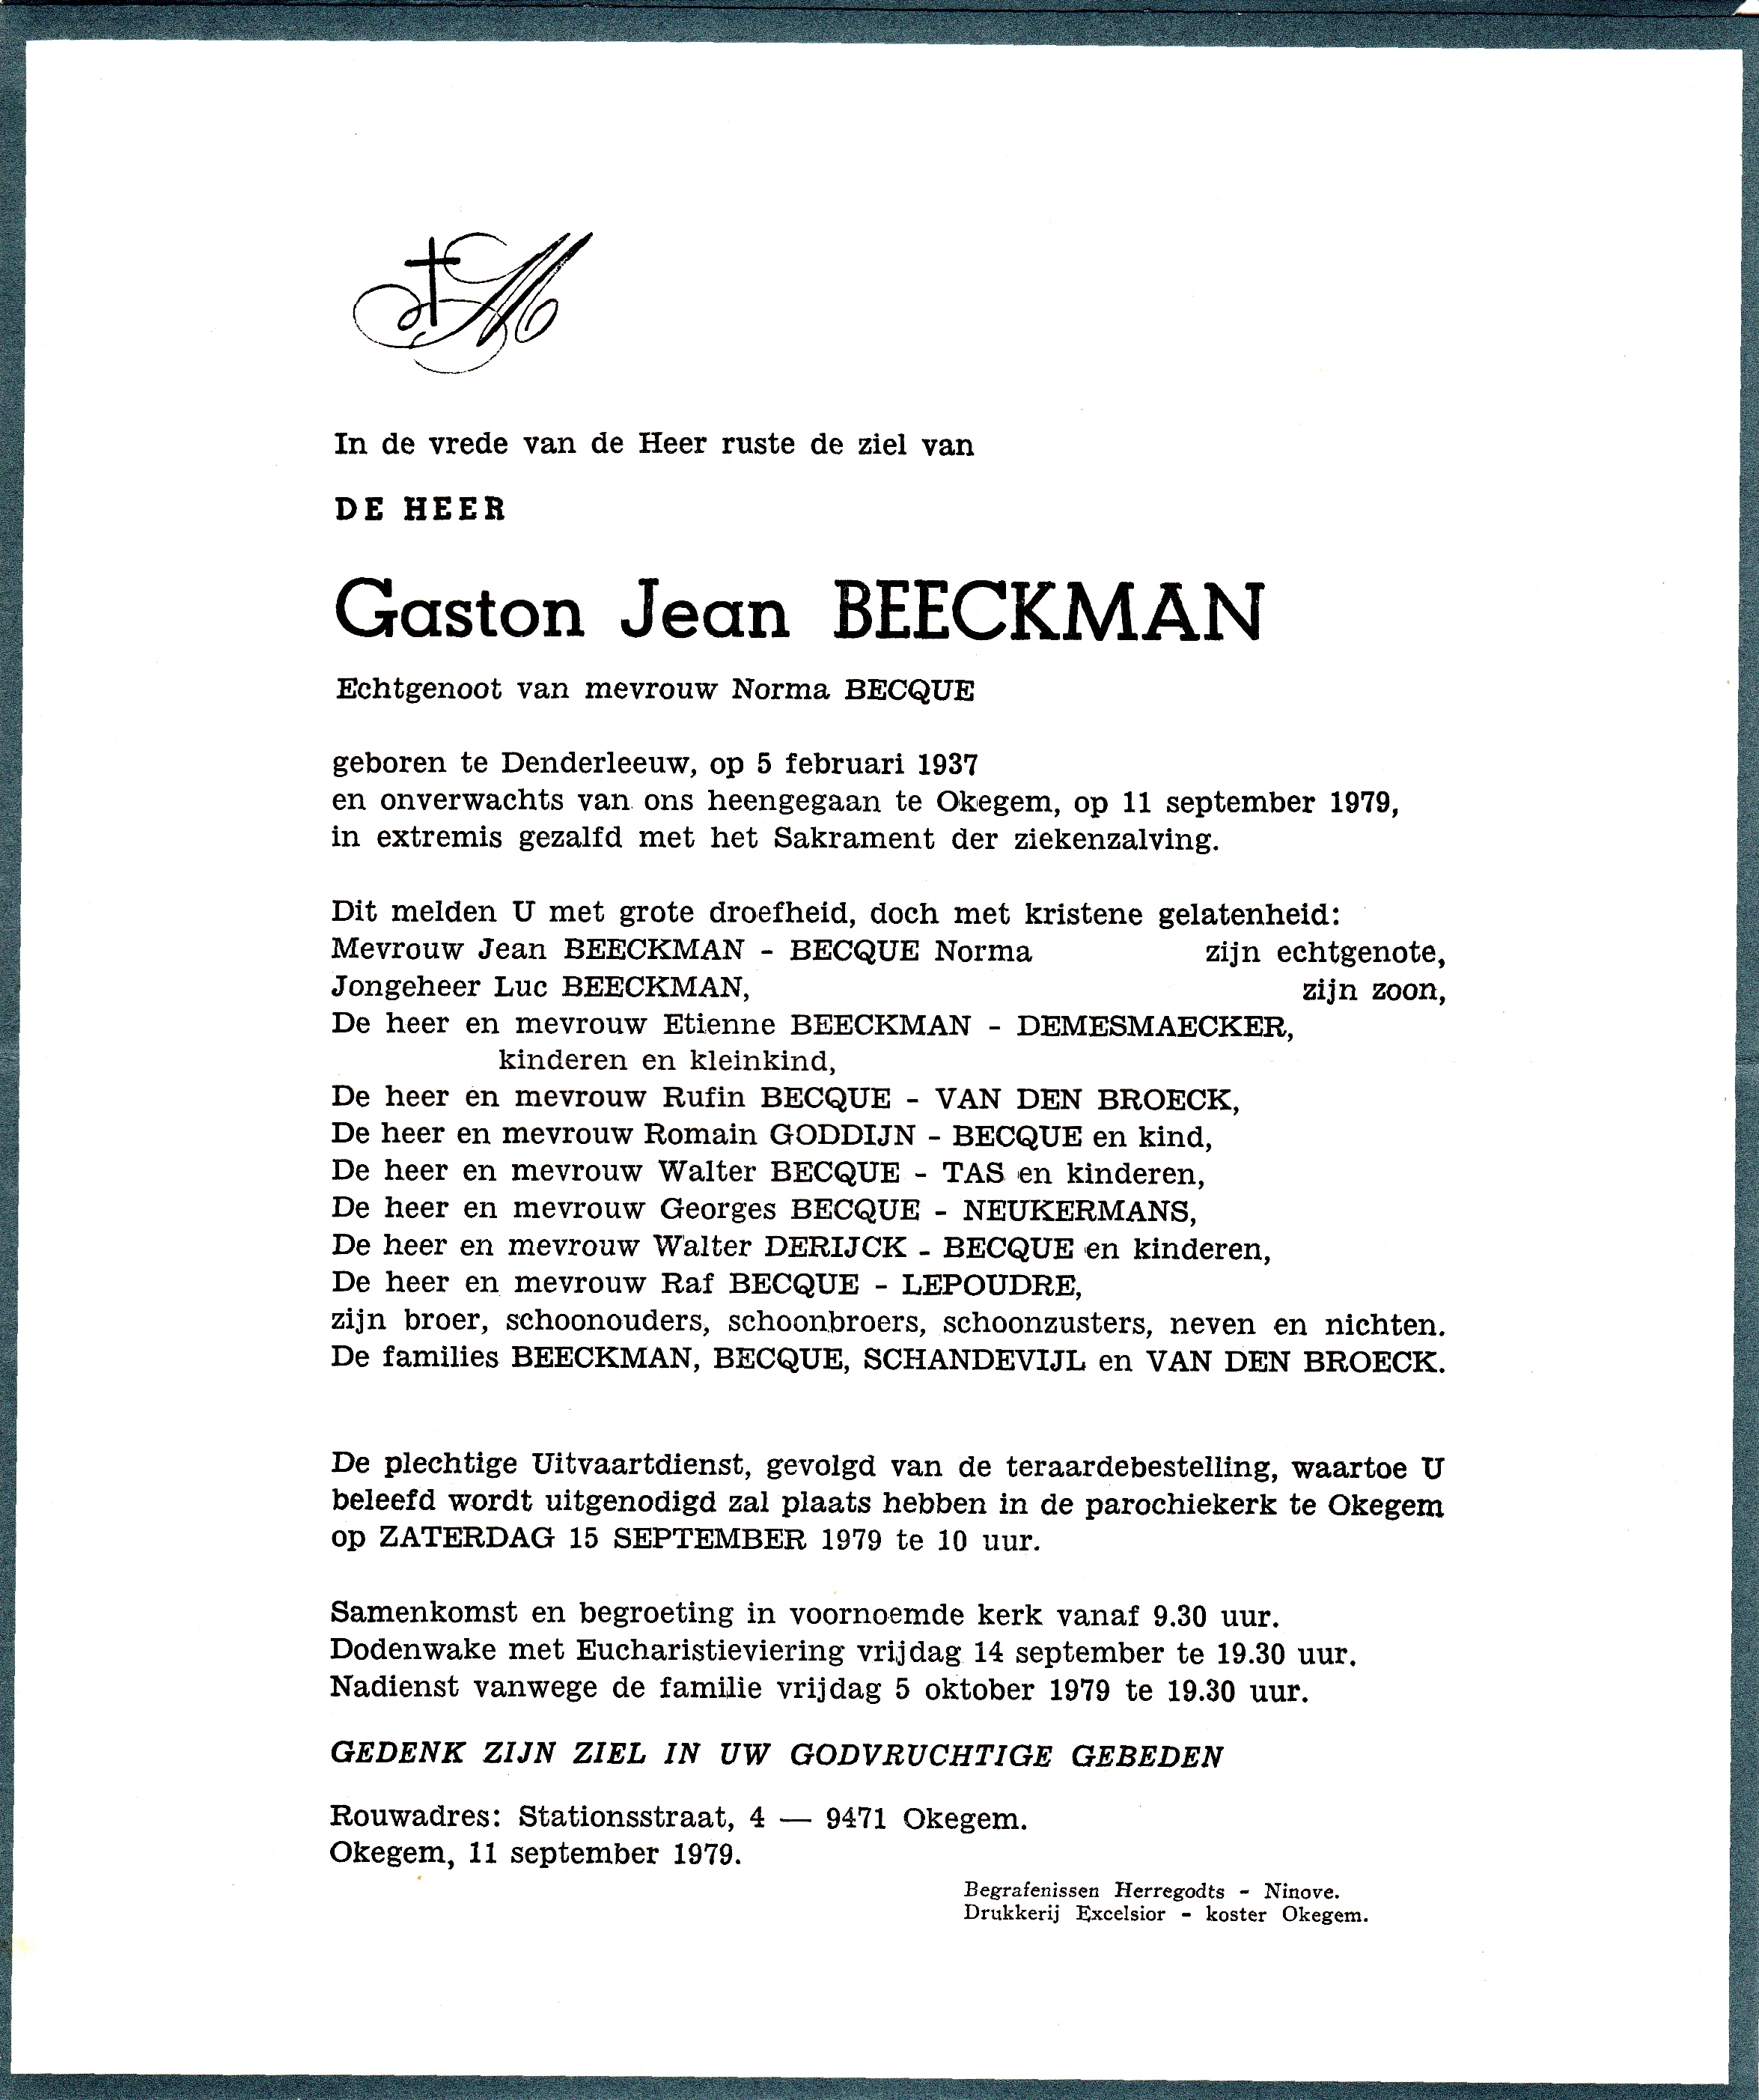 Beeckman Gaston Jean 